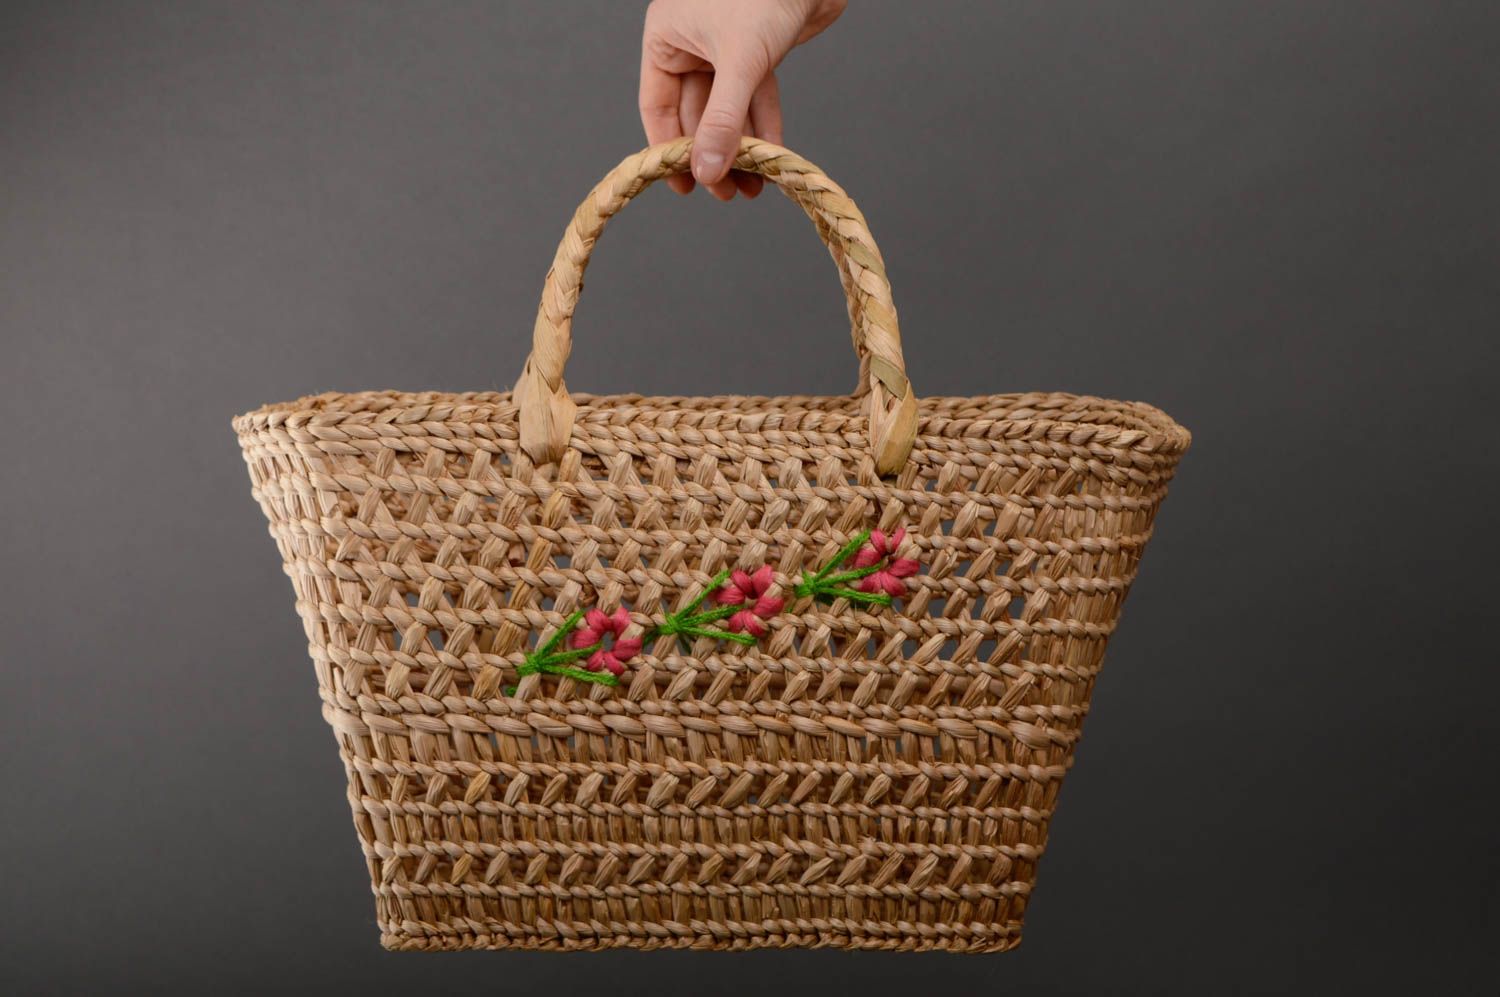 Reedmace basket purse with thread flowers photo 5